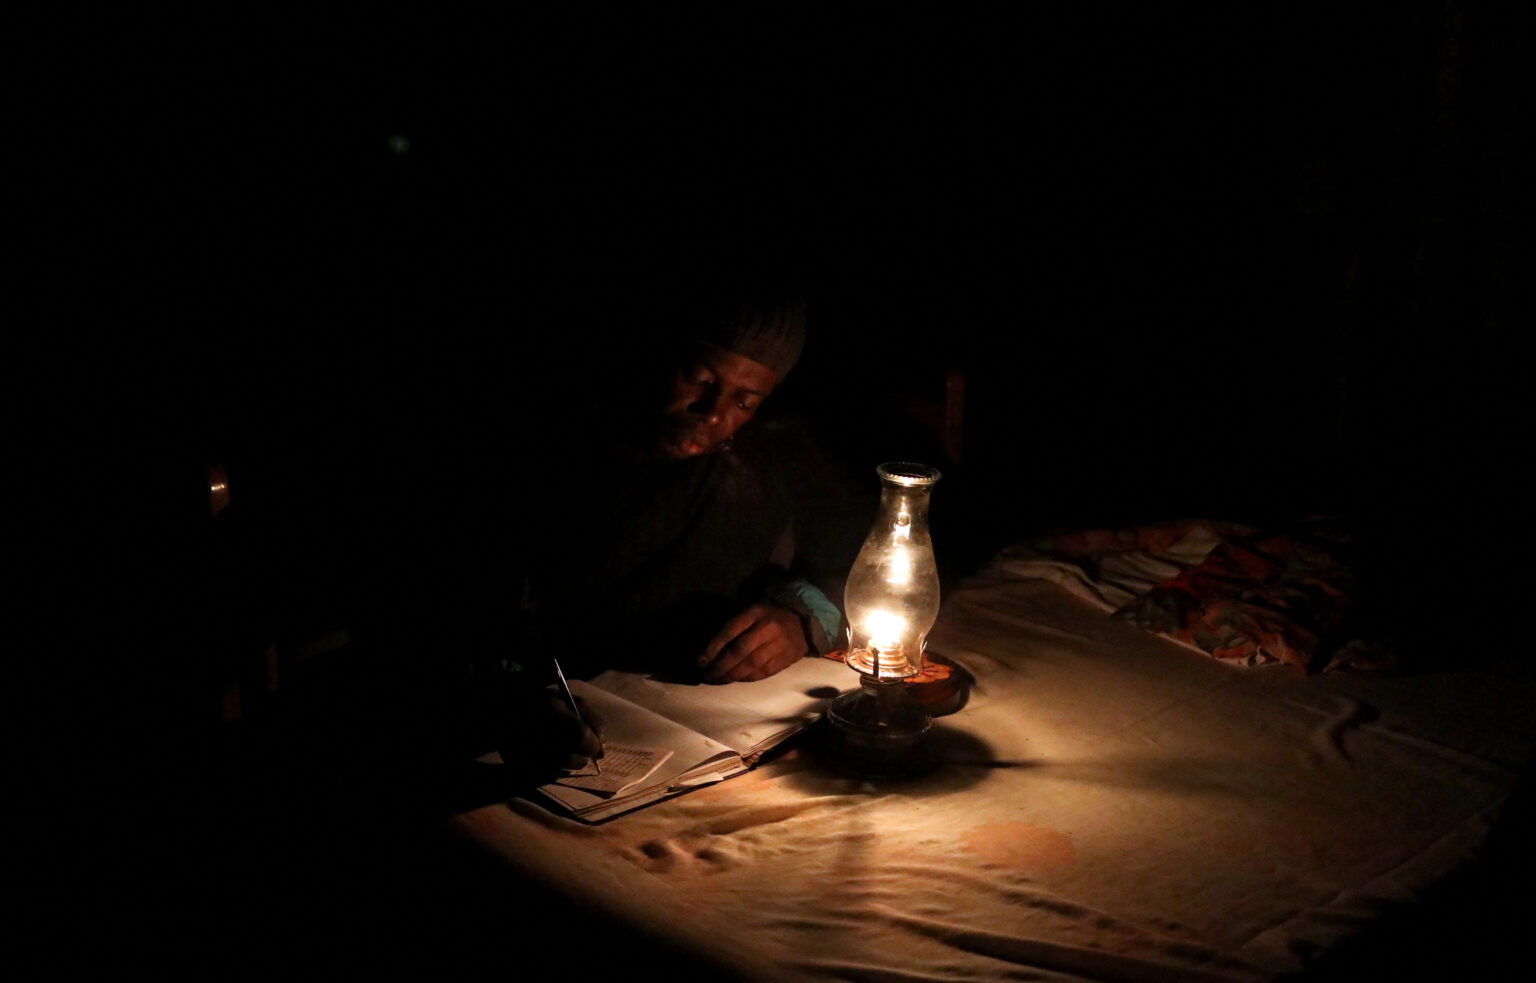 Tanzania power cuts